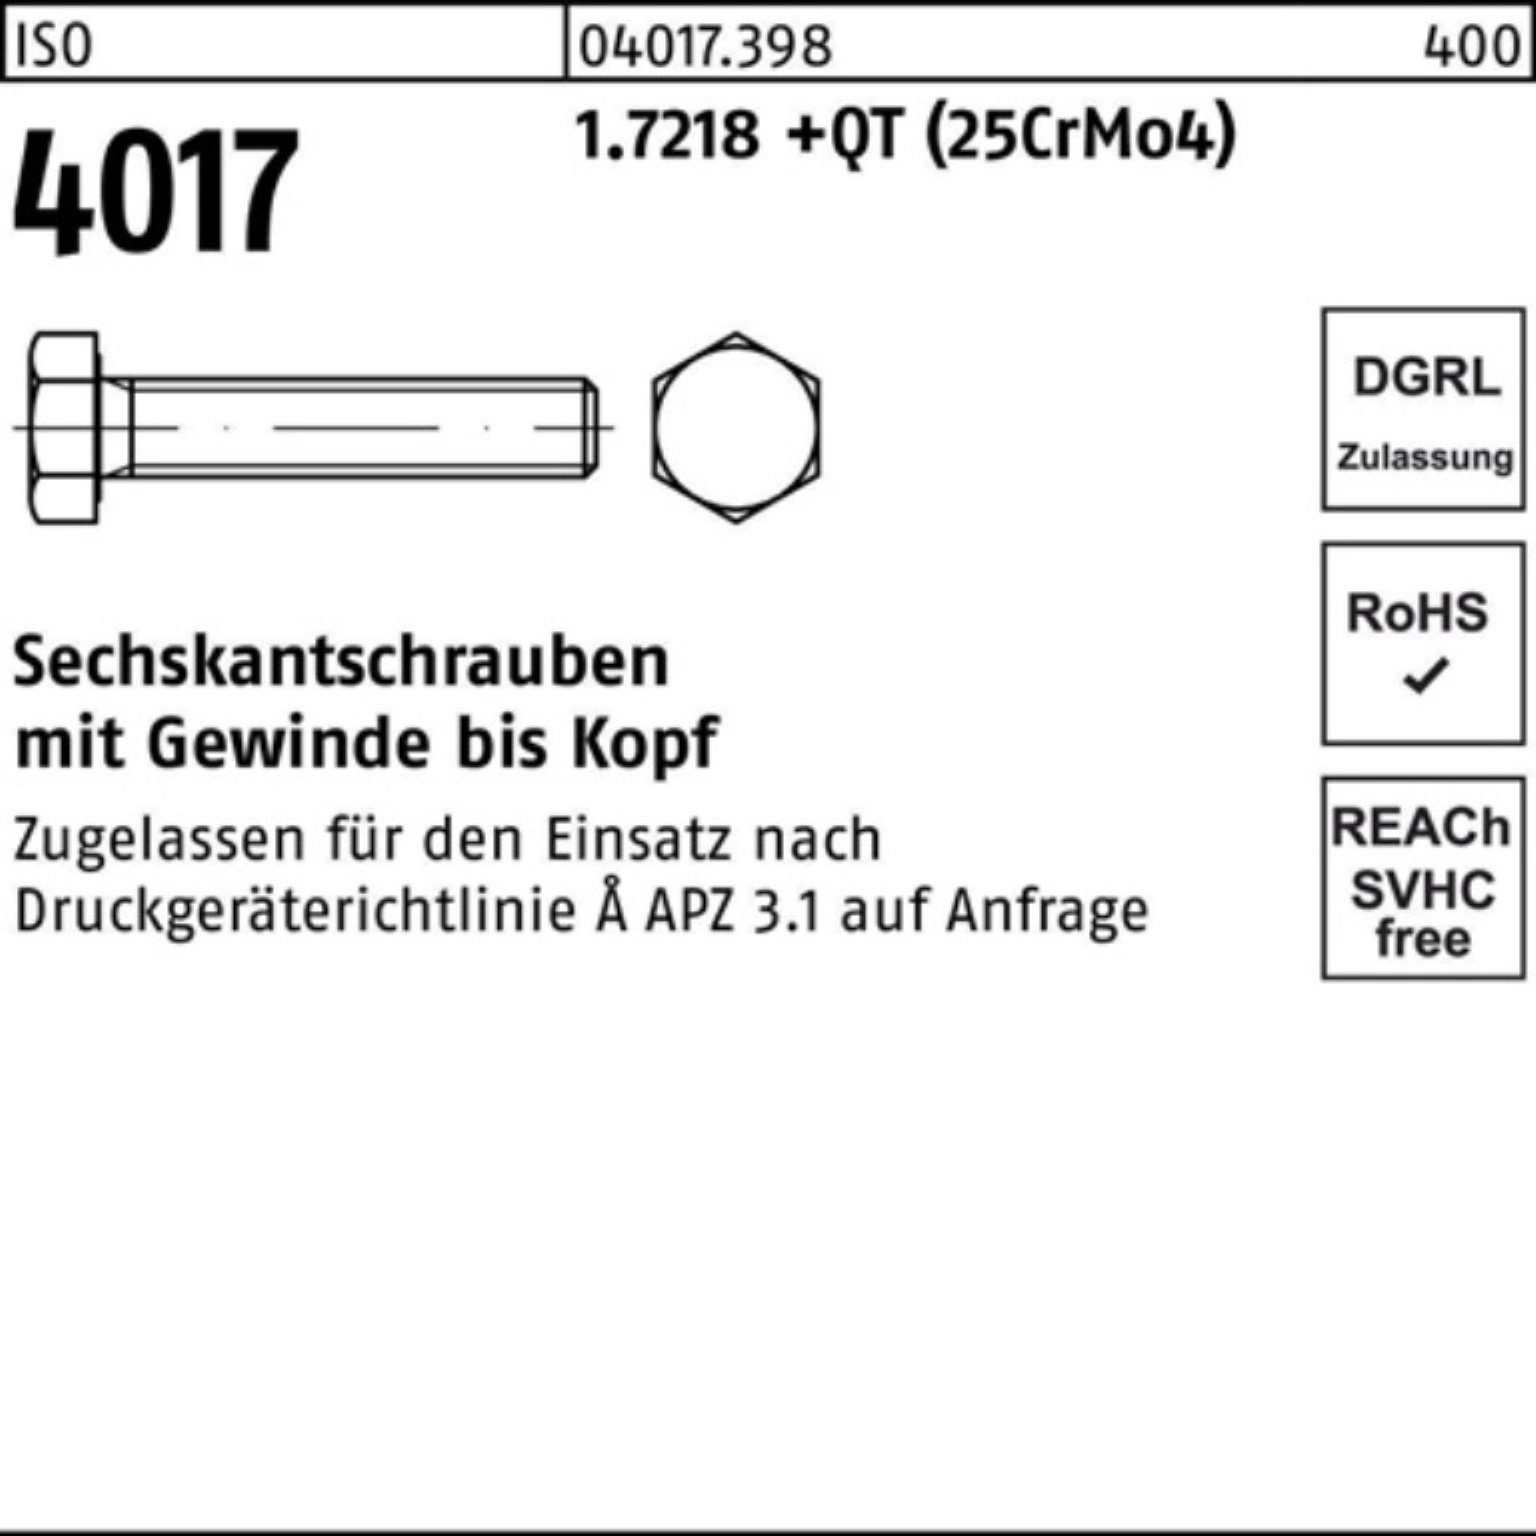 90 Sechskantschraube Sechskantschraube 4017 (25CrMo4) +QT ISO 1.7218 100er Pack M27x Bufab VG